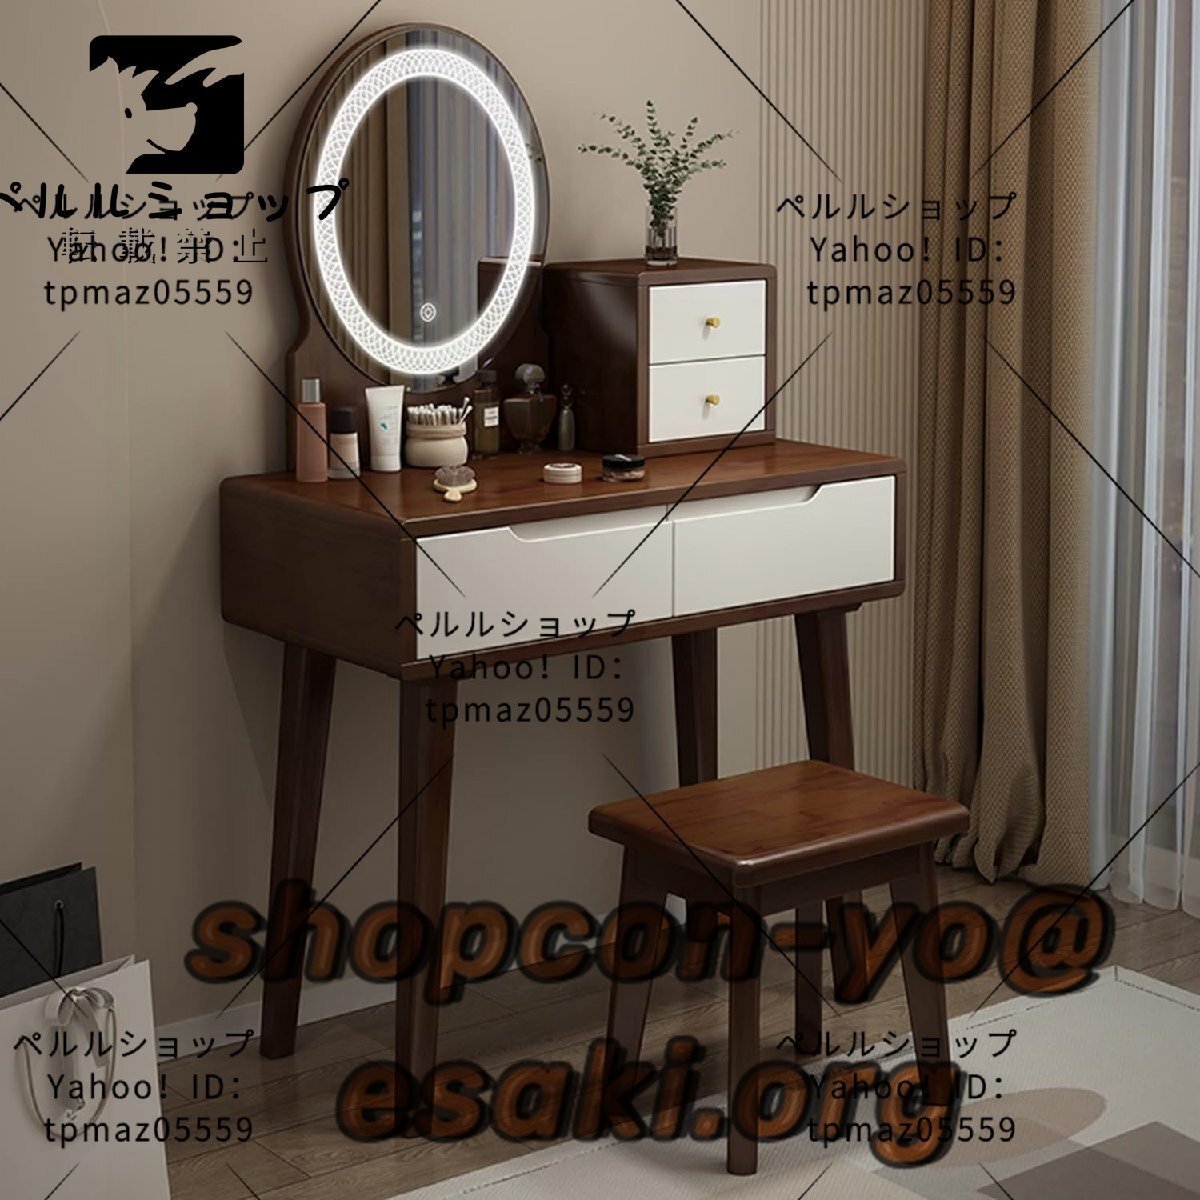  dresser .? pcs 3 color . change light strip storage drawer attaching wooden. modern . bed room furniture walnut color + white color double draw 